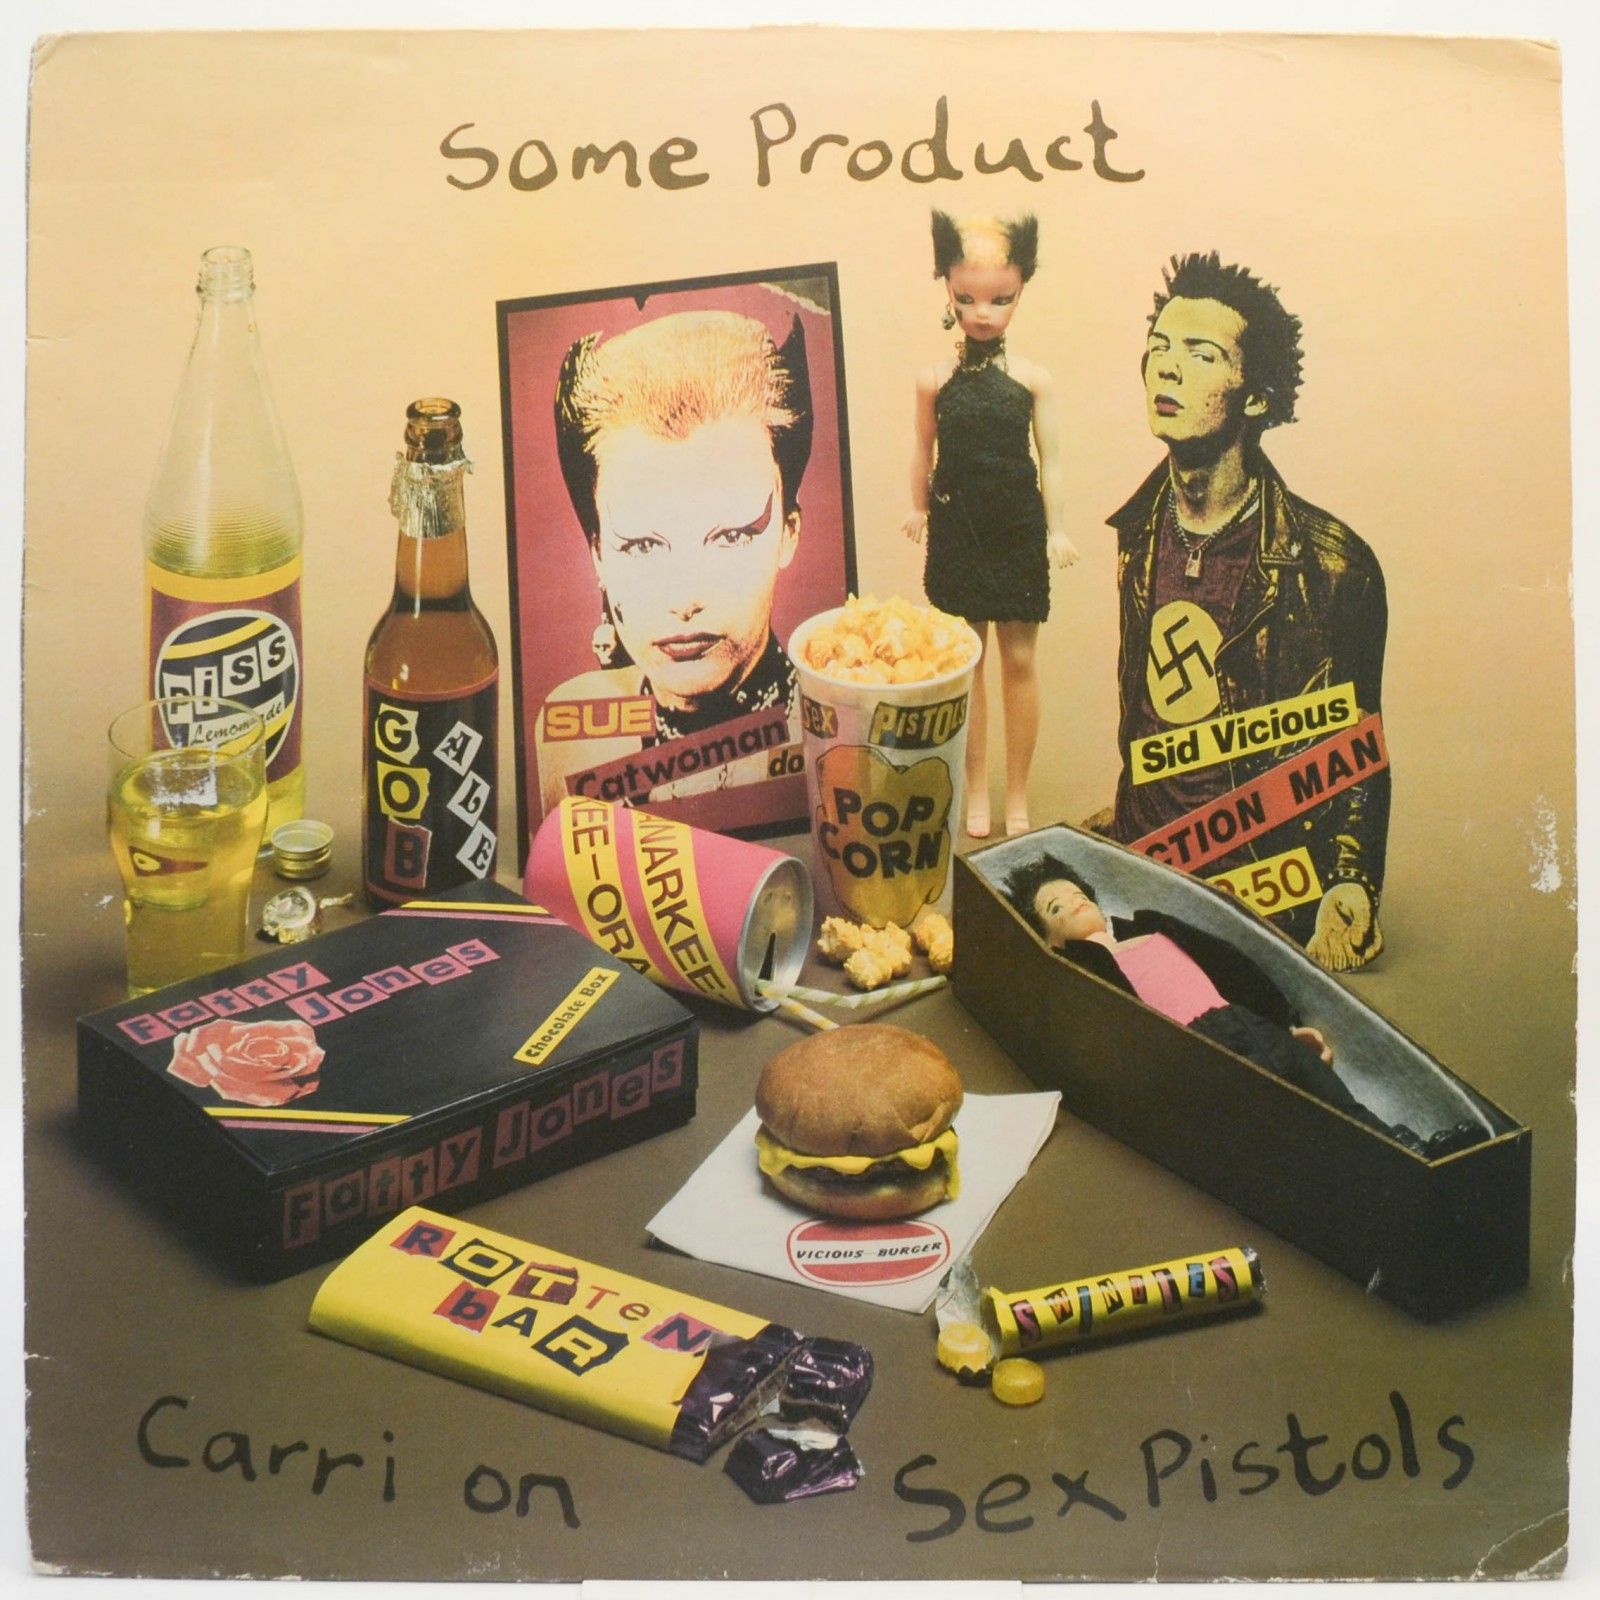 Sex Pistols — Some Product - Carri On Sex Pistols, 1979